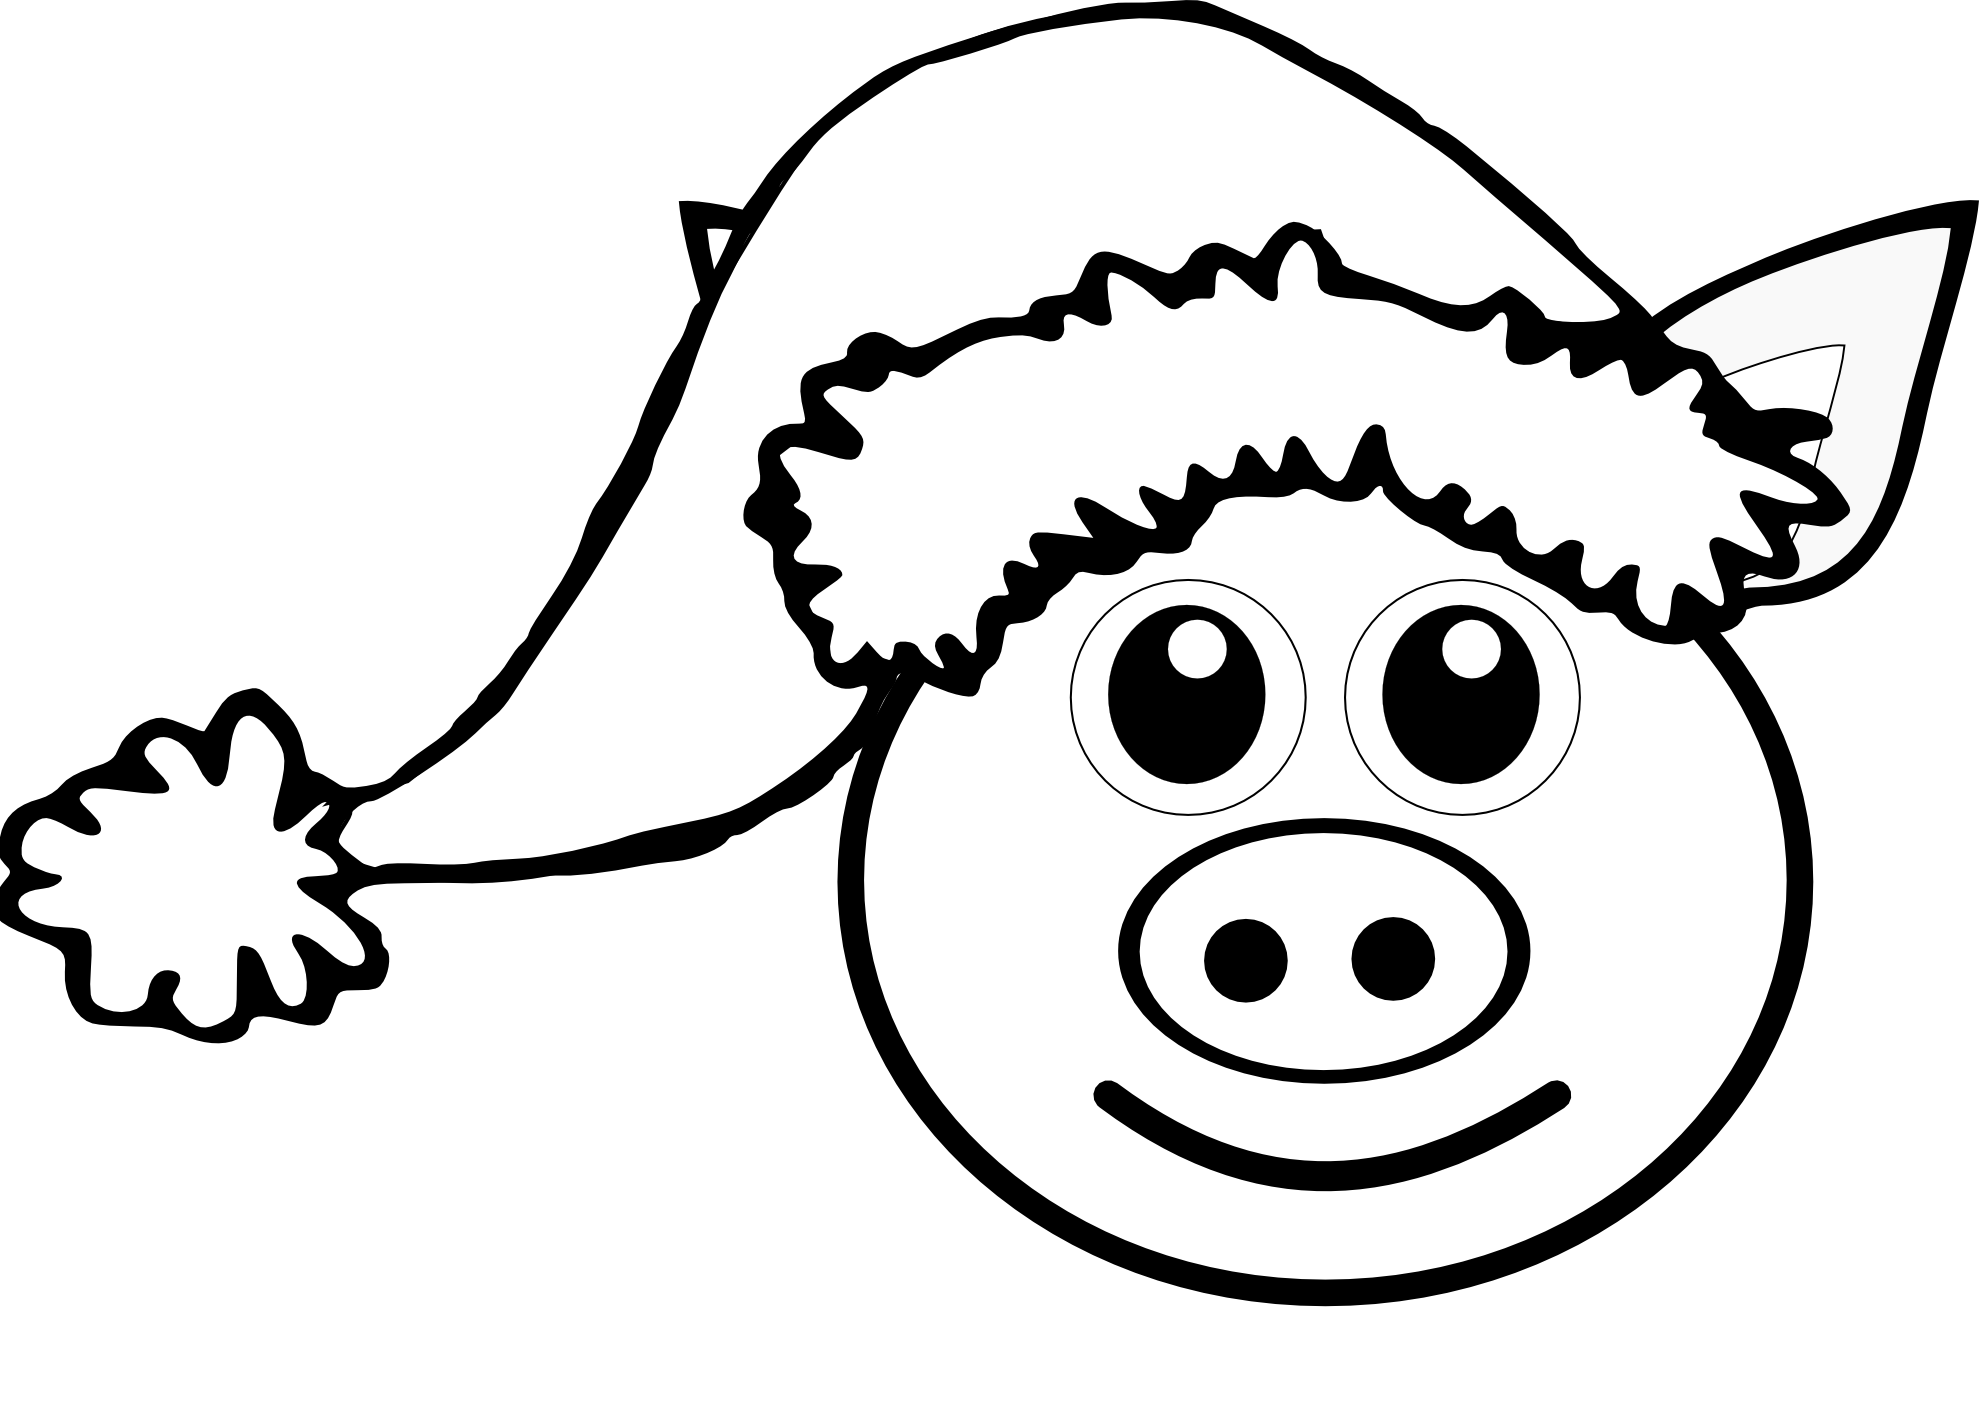 Clip Art: palomaironique pig face cartoon pink ...